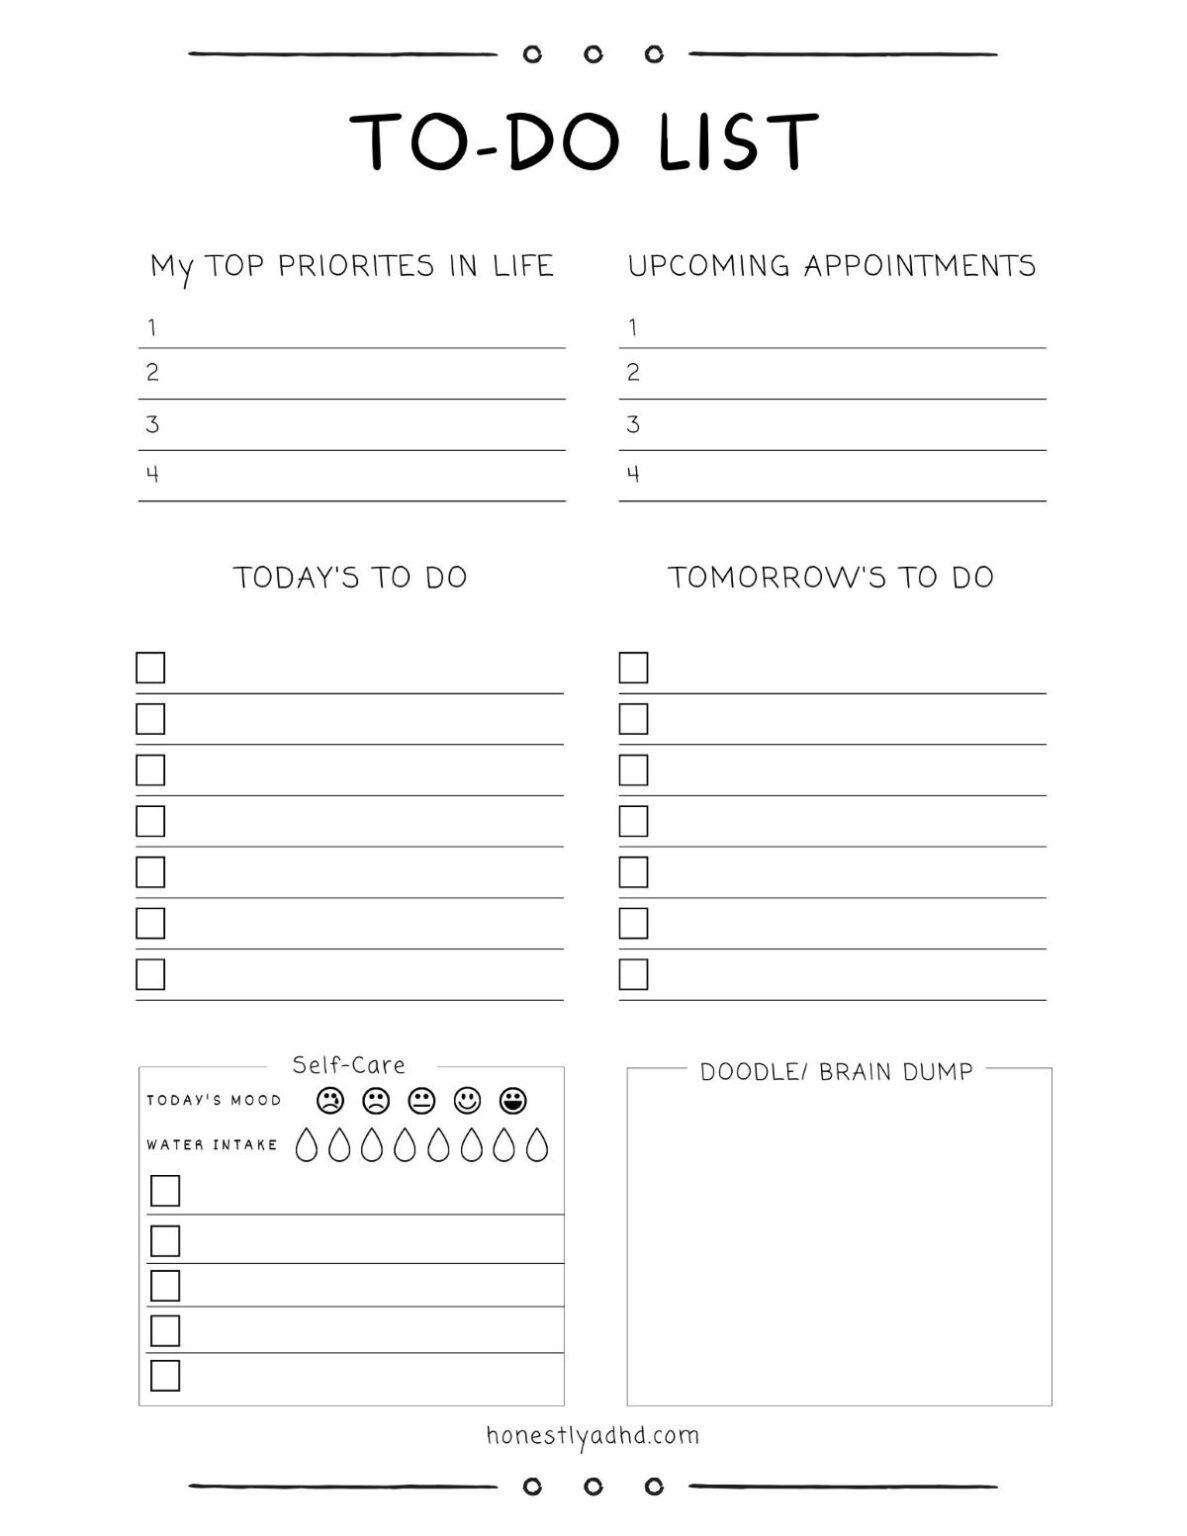 free-adhd-friendly-to-do-list-3-printable-templates-honestly-adhd